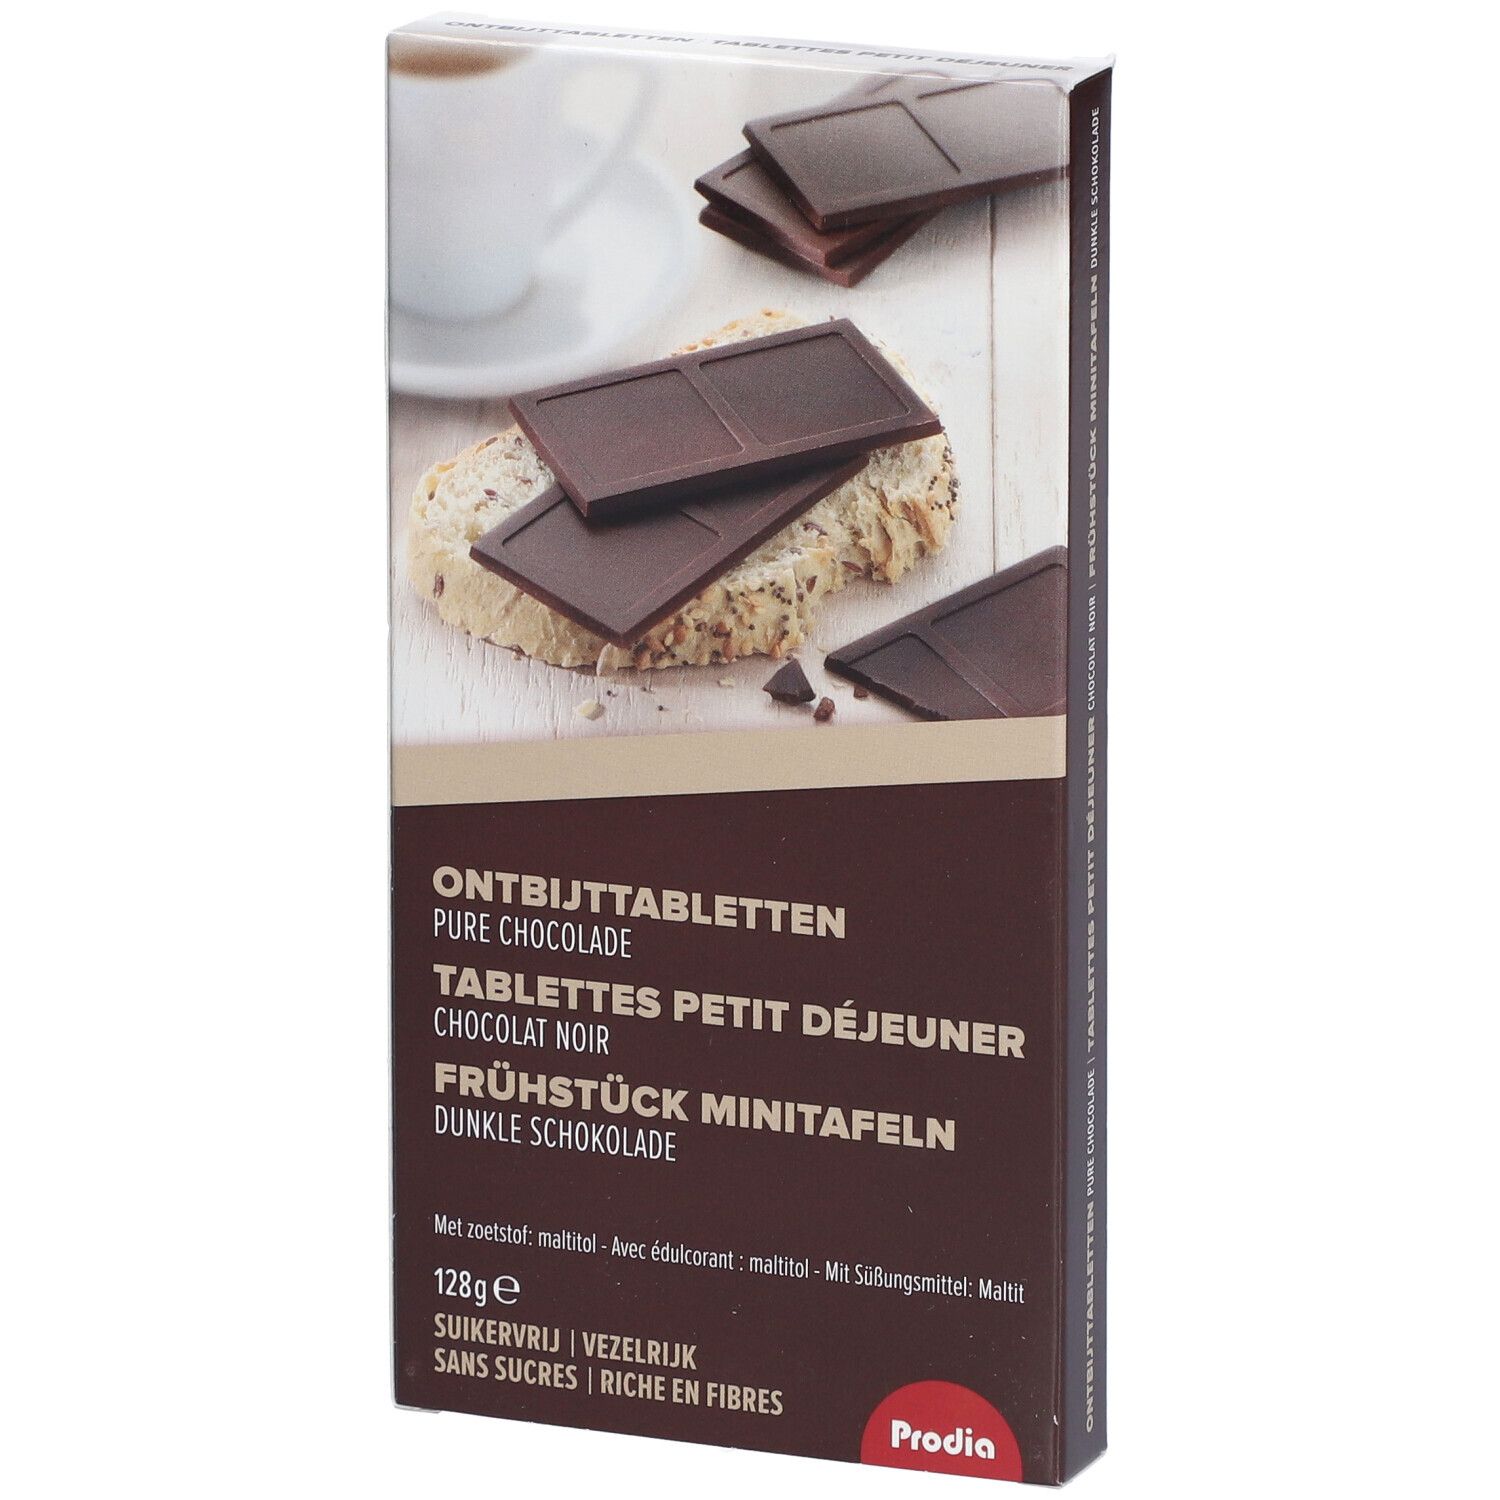 Image of Prodia Frühstück Minitafeln Dunkle Schokolade